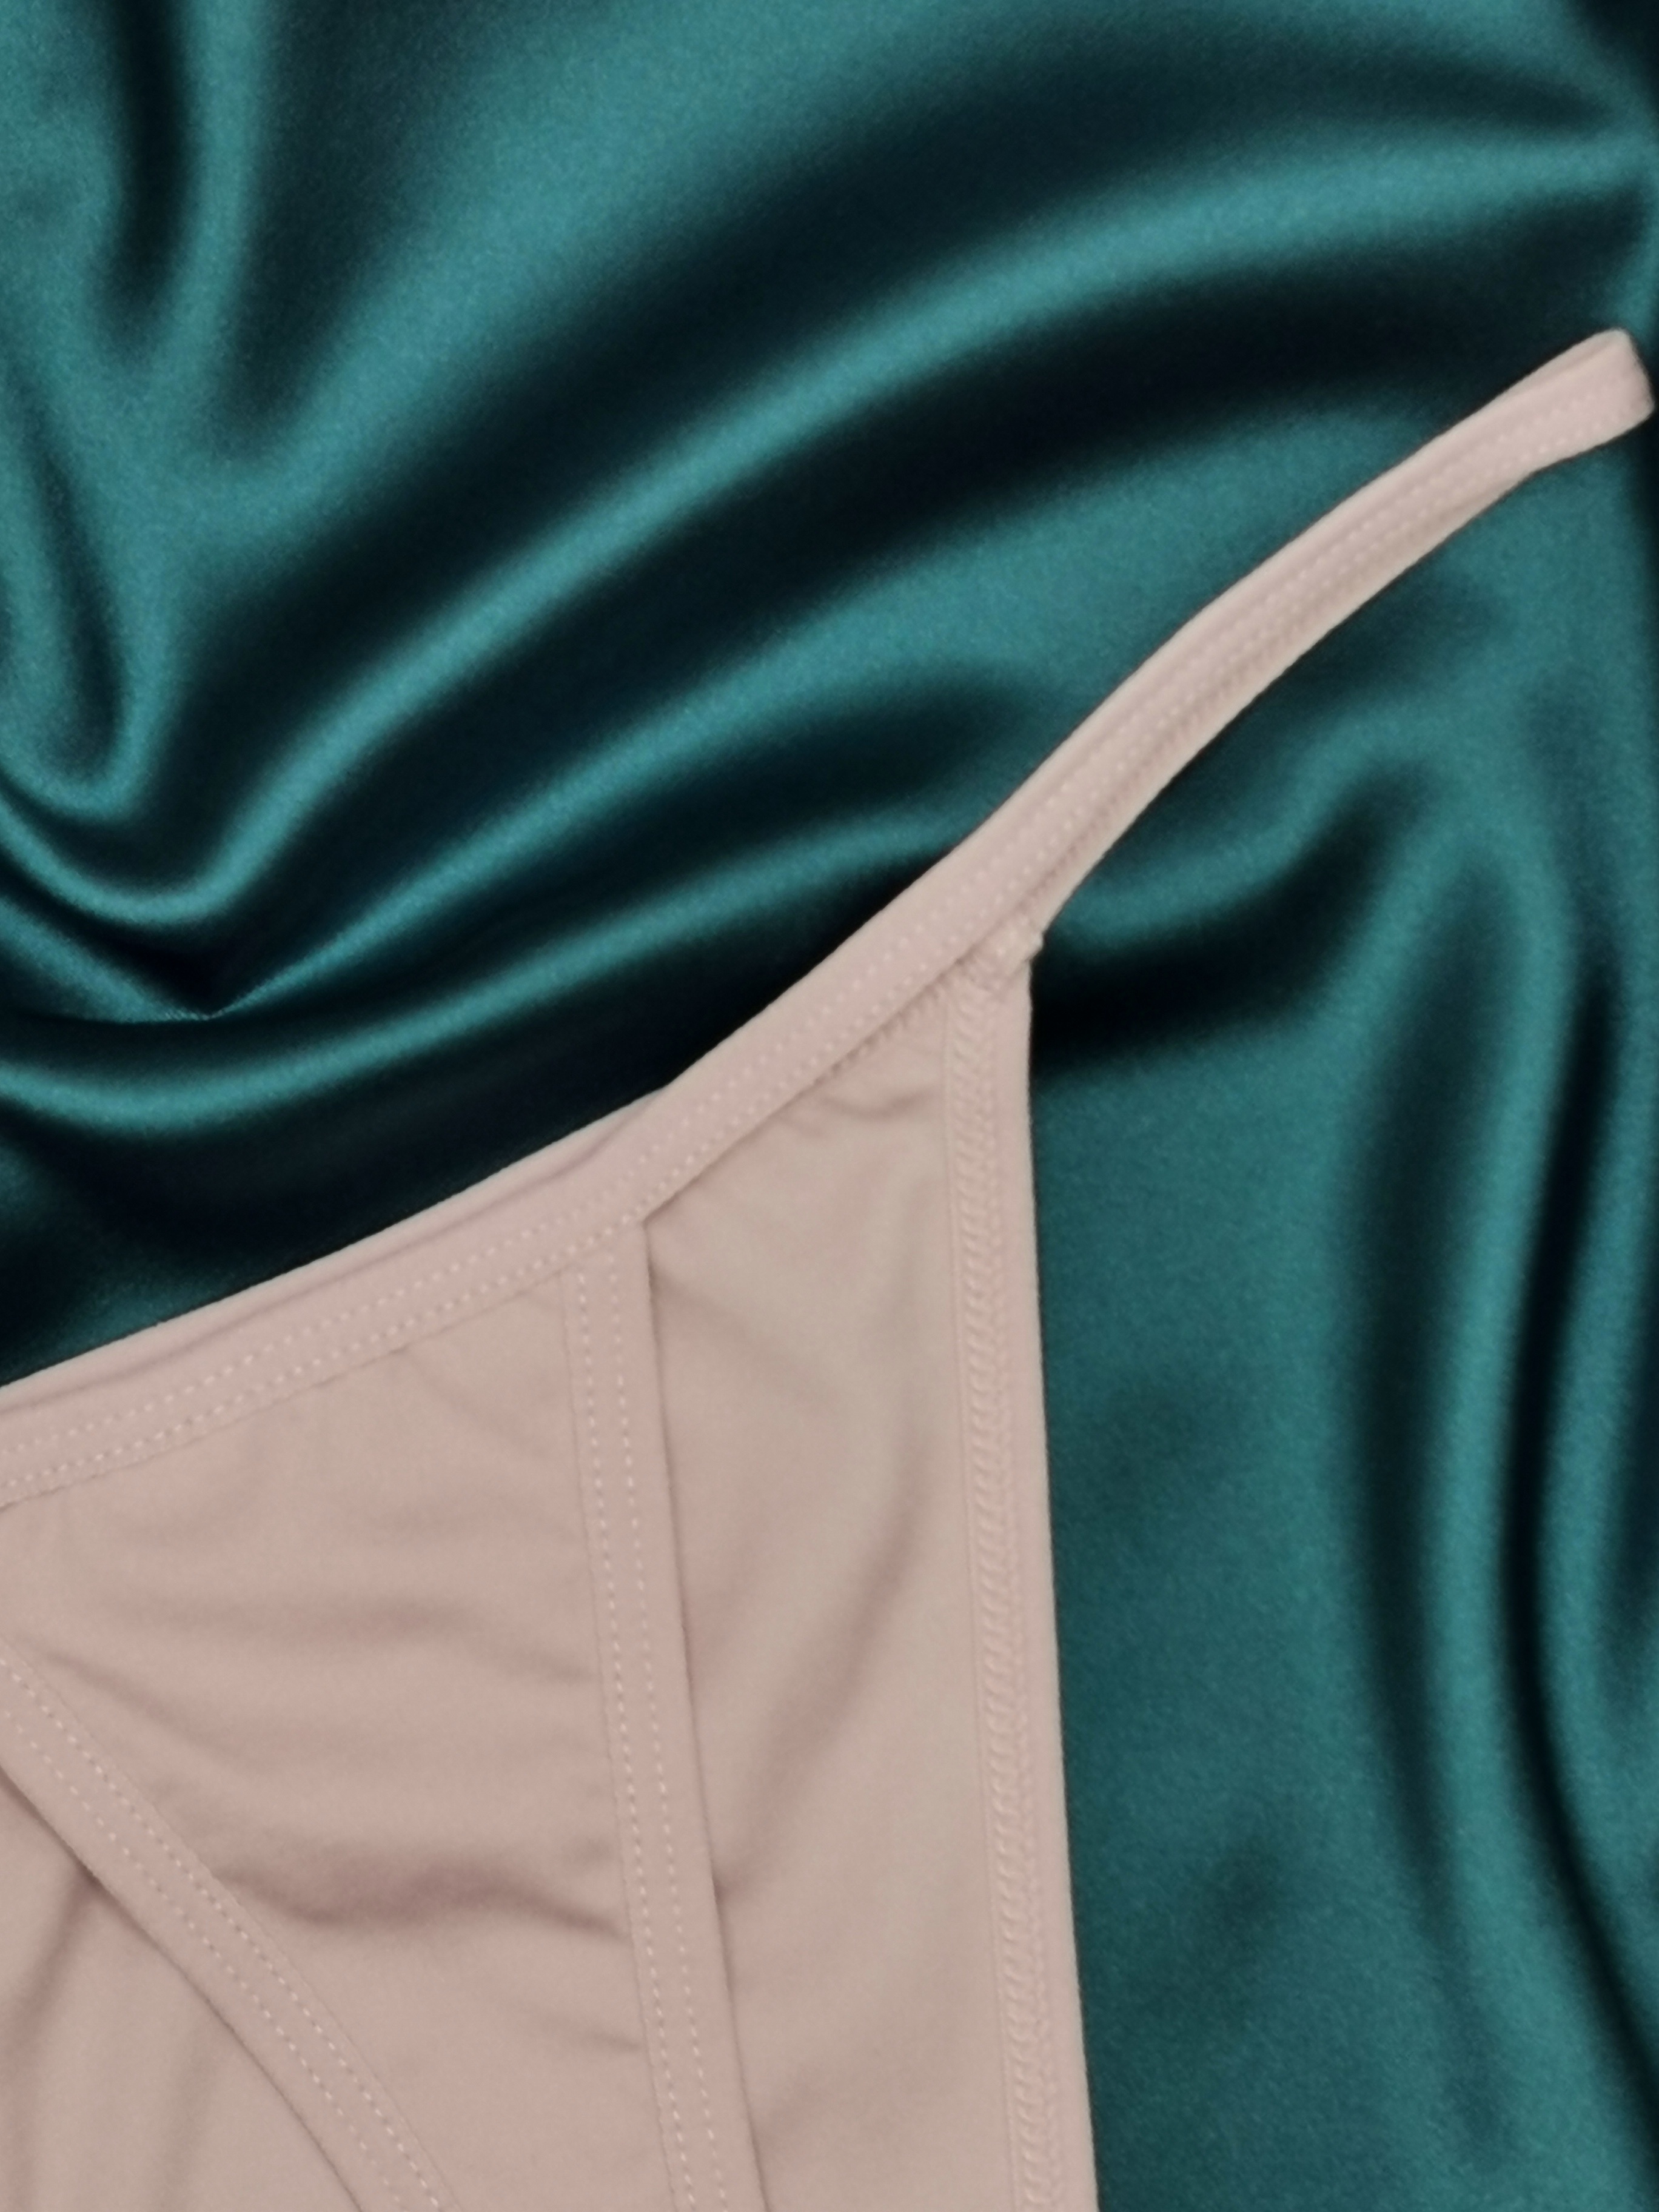 Solid Silk Jersey Bikini Style Panties Tanga Style Underwear in Your Choice  of Colors 